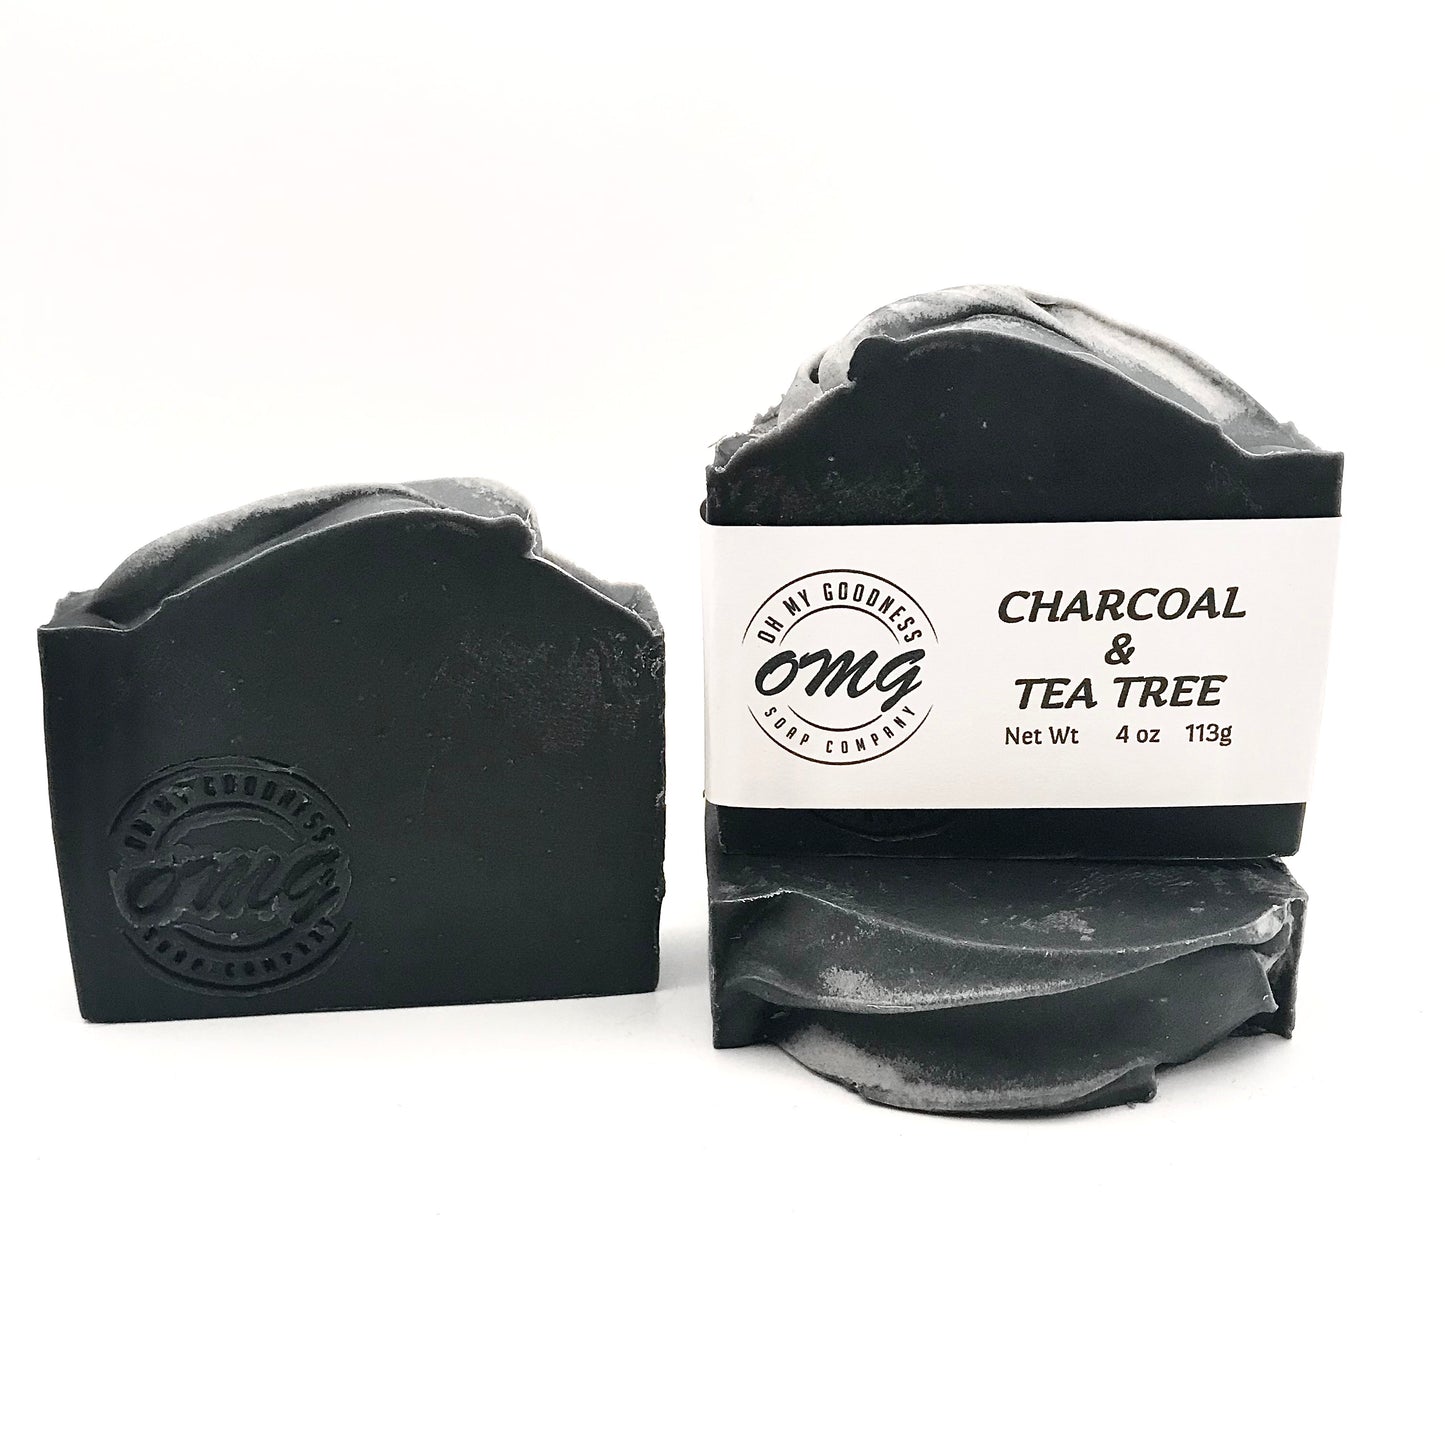 Charcoal & Tea Tree  Soap